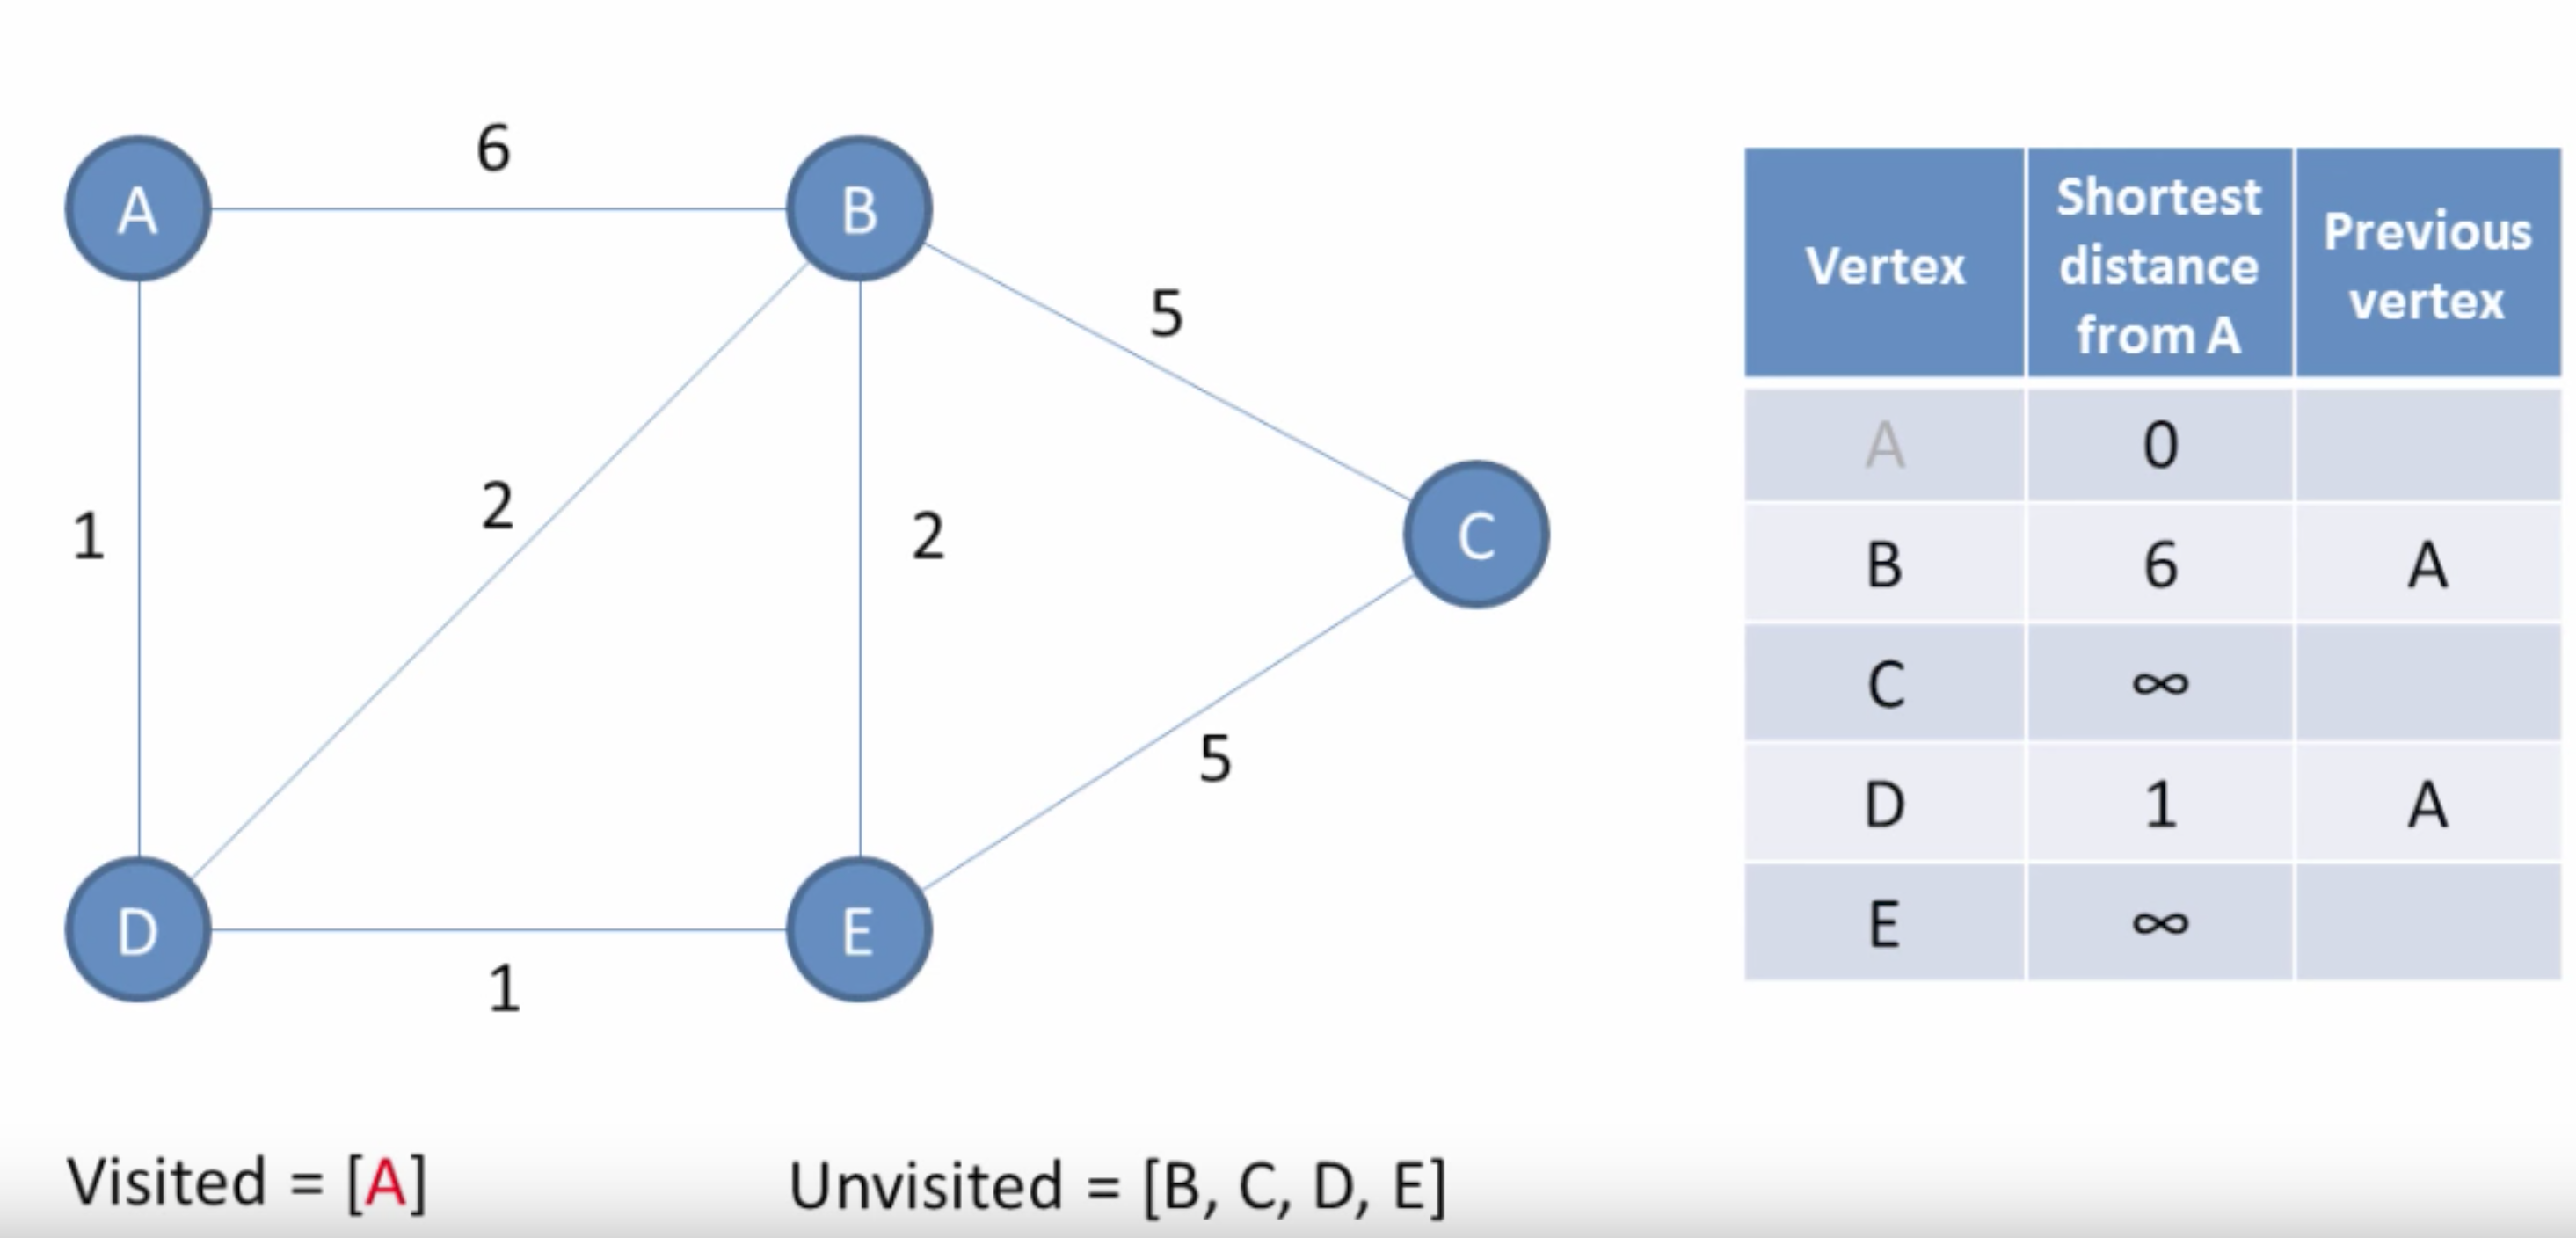 Dijkstra's algorithm stage 1 tracing